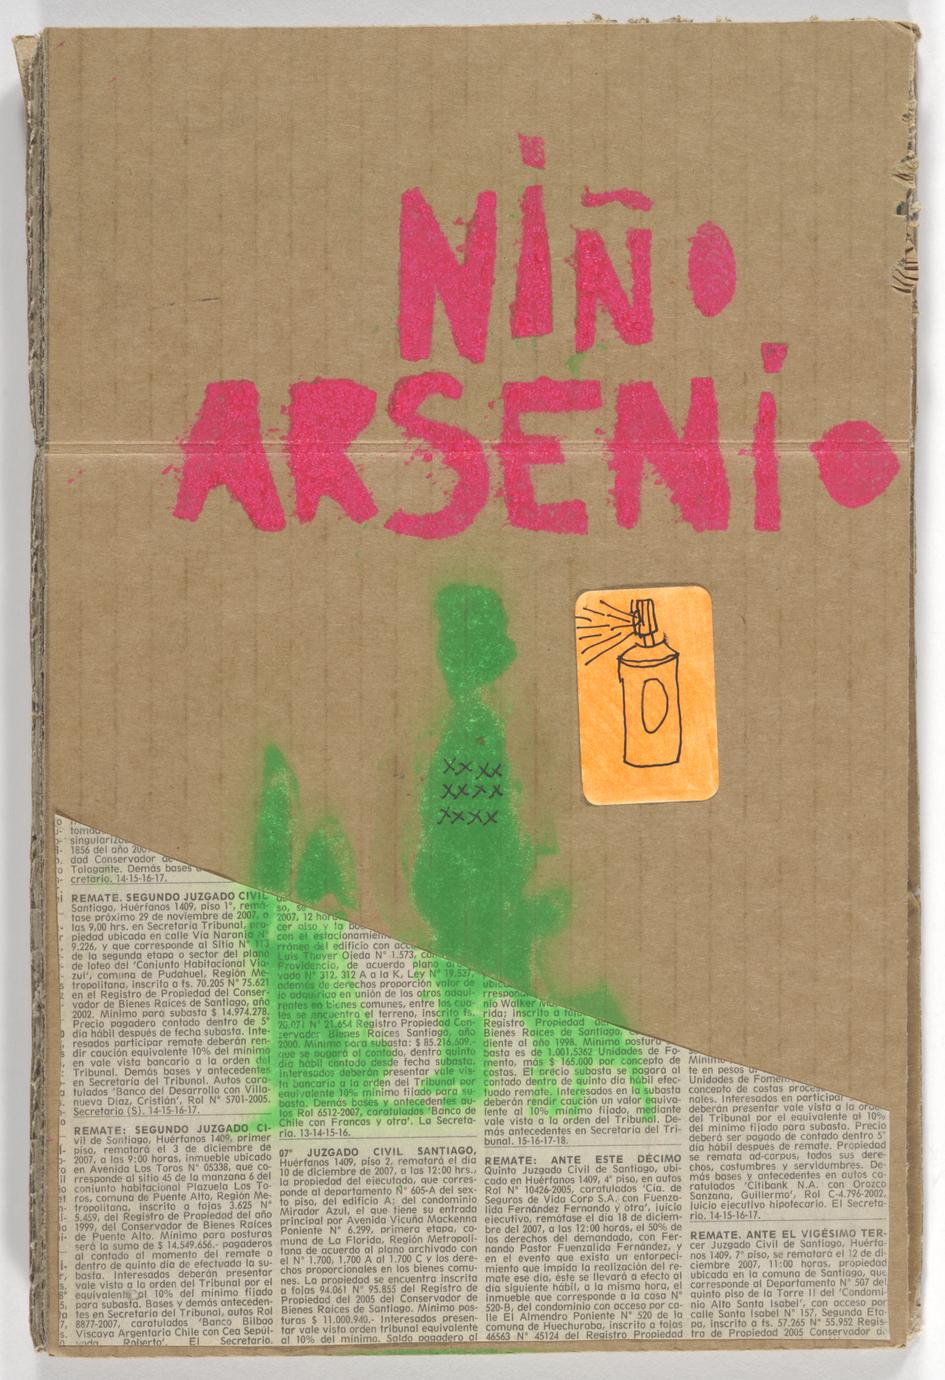 Niño Arsenio (1 of 3)